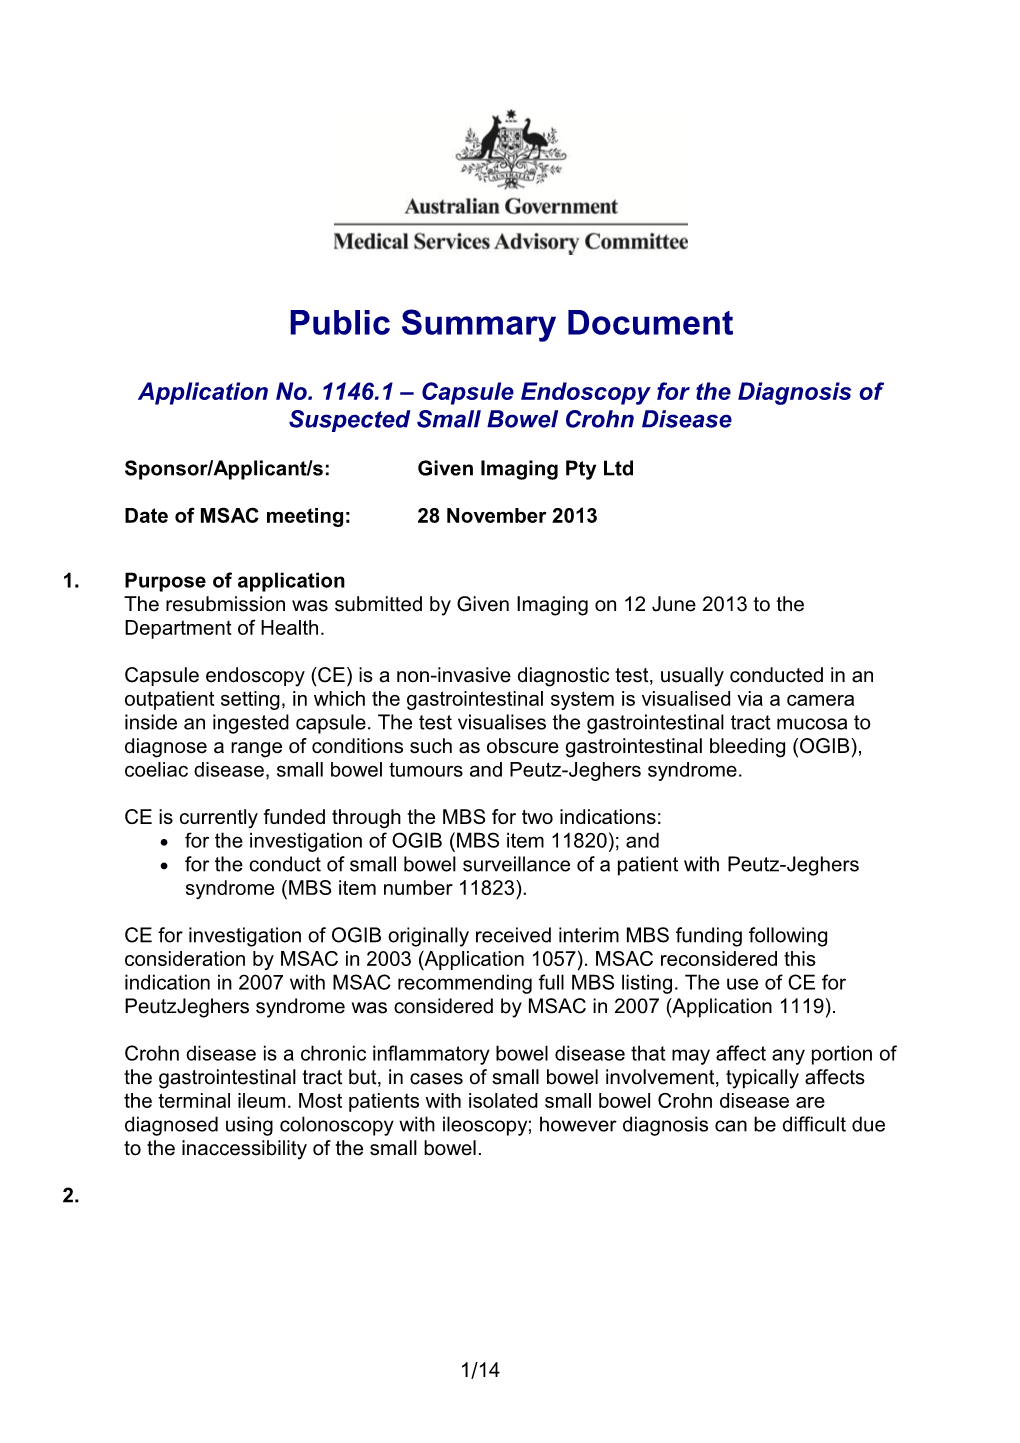 Application No. 1146.1 Capsule Endoscopy for the Diagnosis of Suspected Small Bowel Crohn